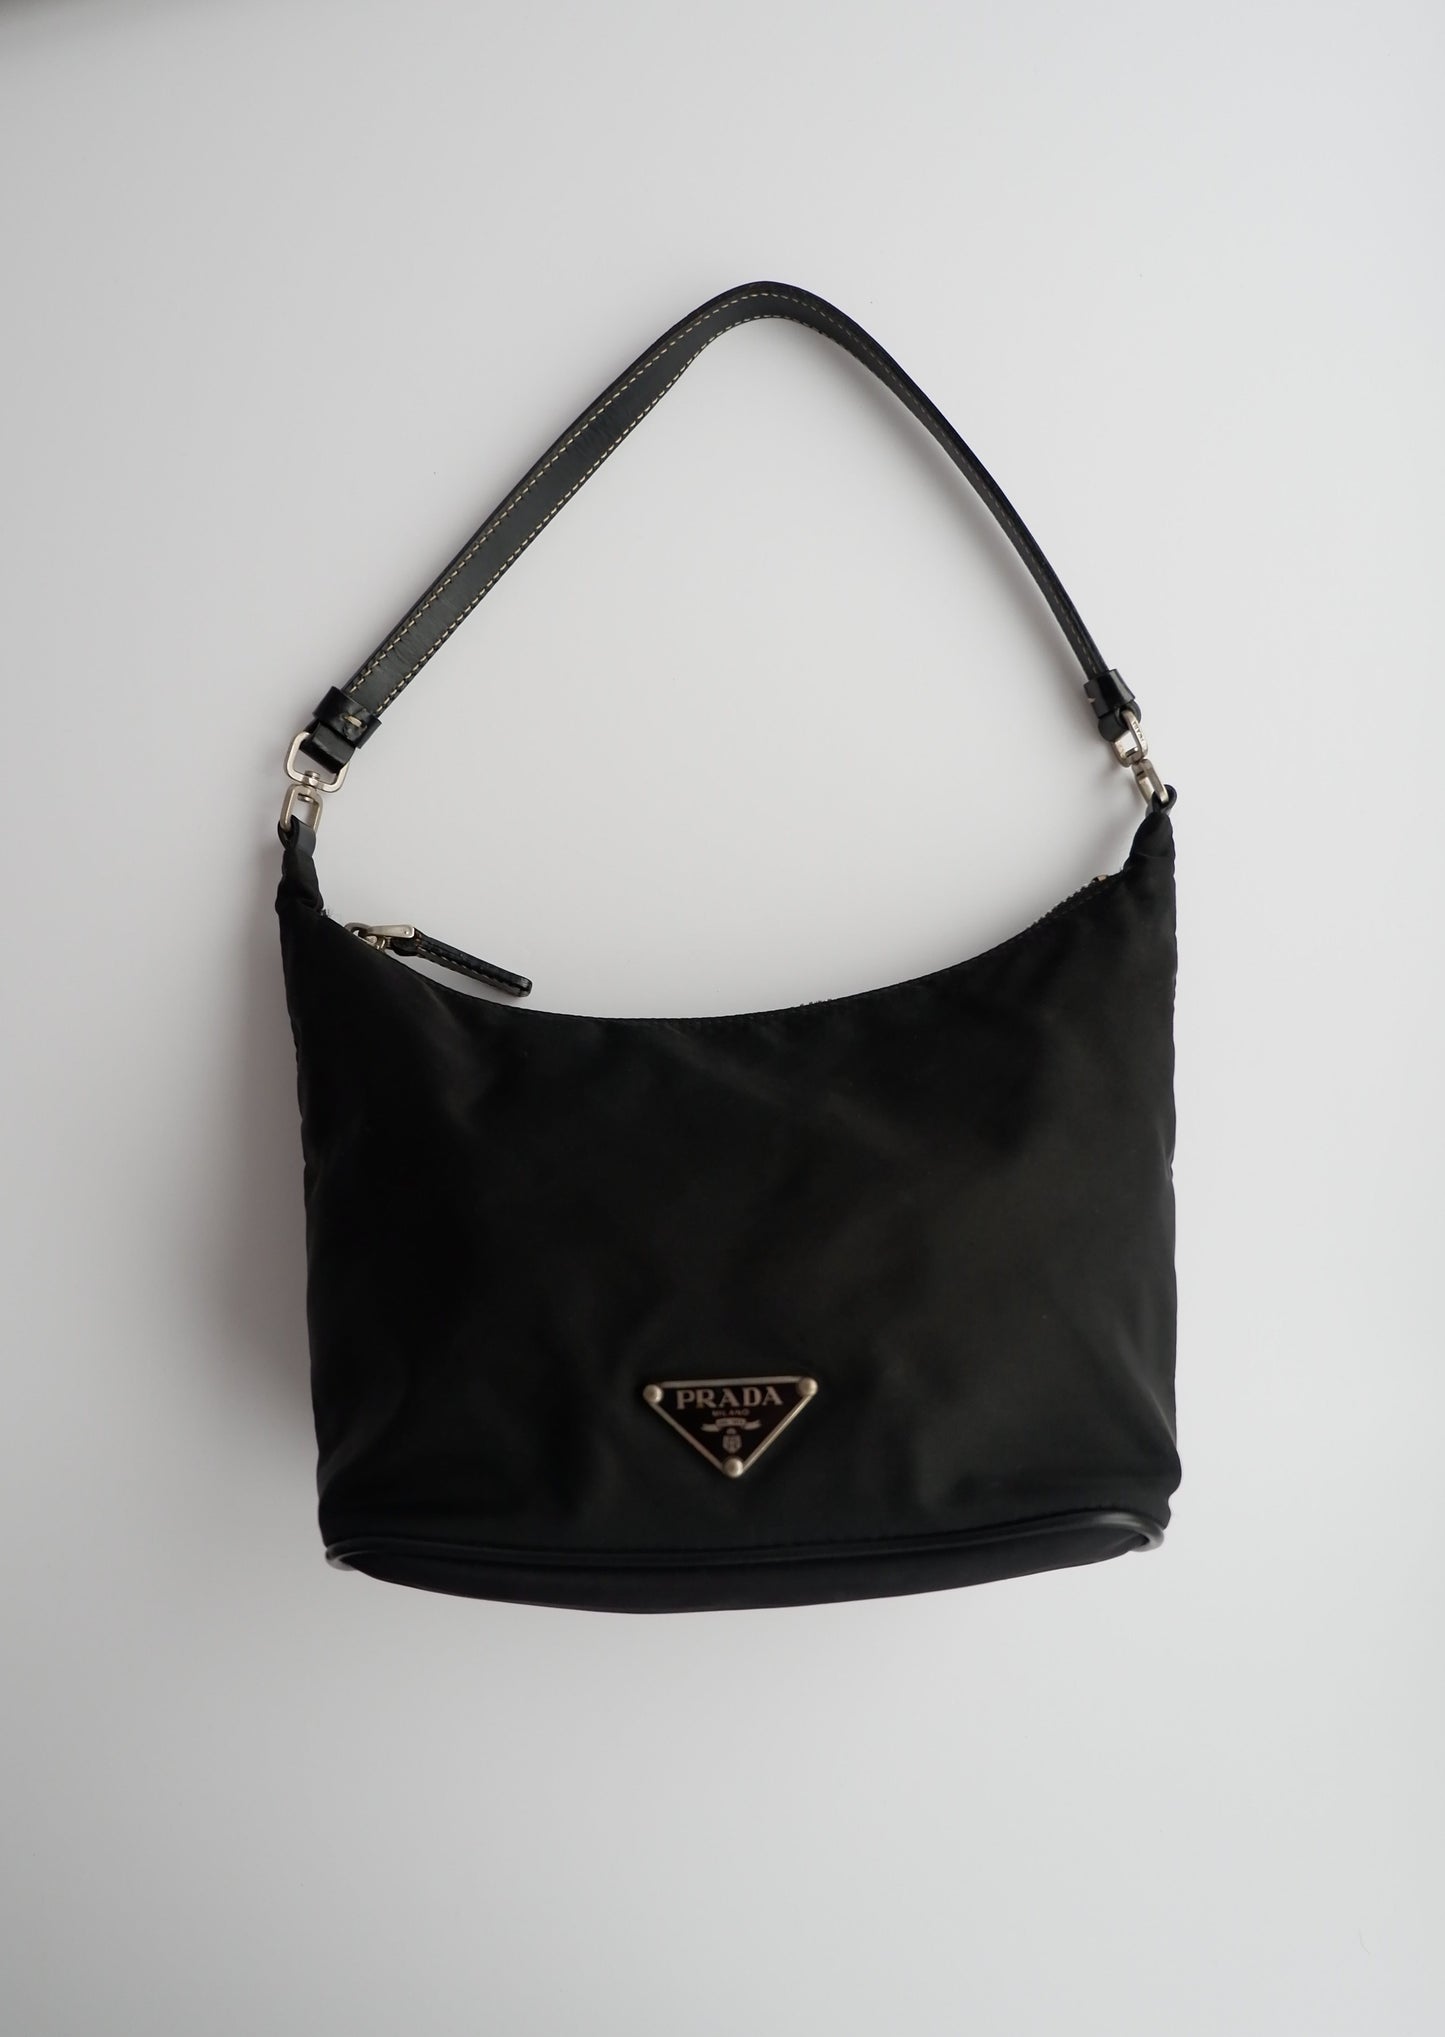 Authentic Preowned Prada Black Nylon Shoulder Bag